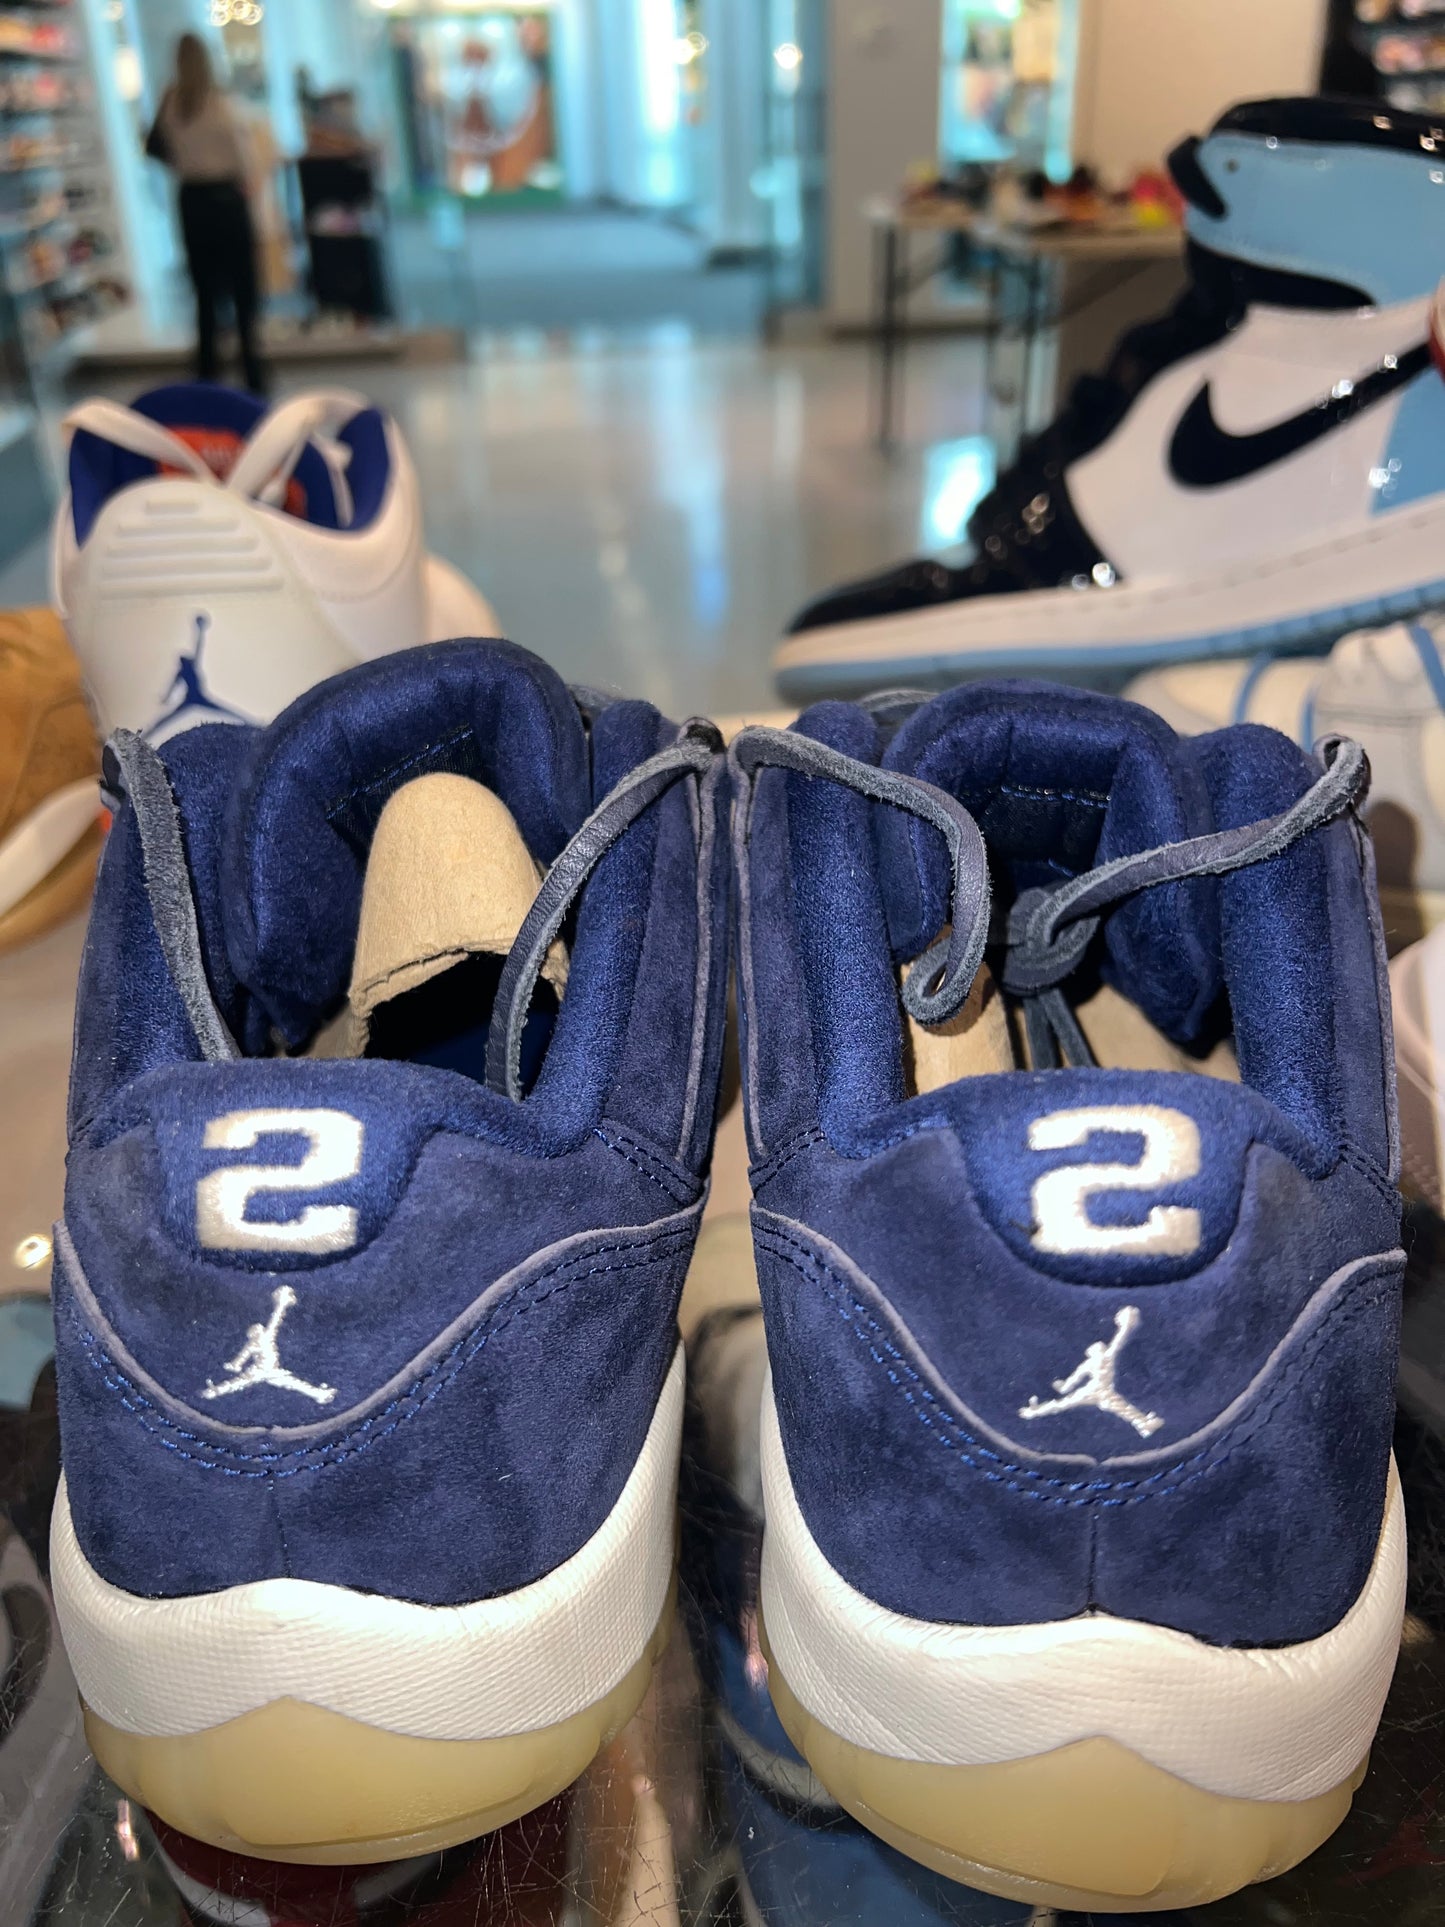 Size 9 Air Jordan 11 Low “Derek Jeter” (Mall)